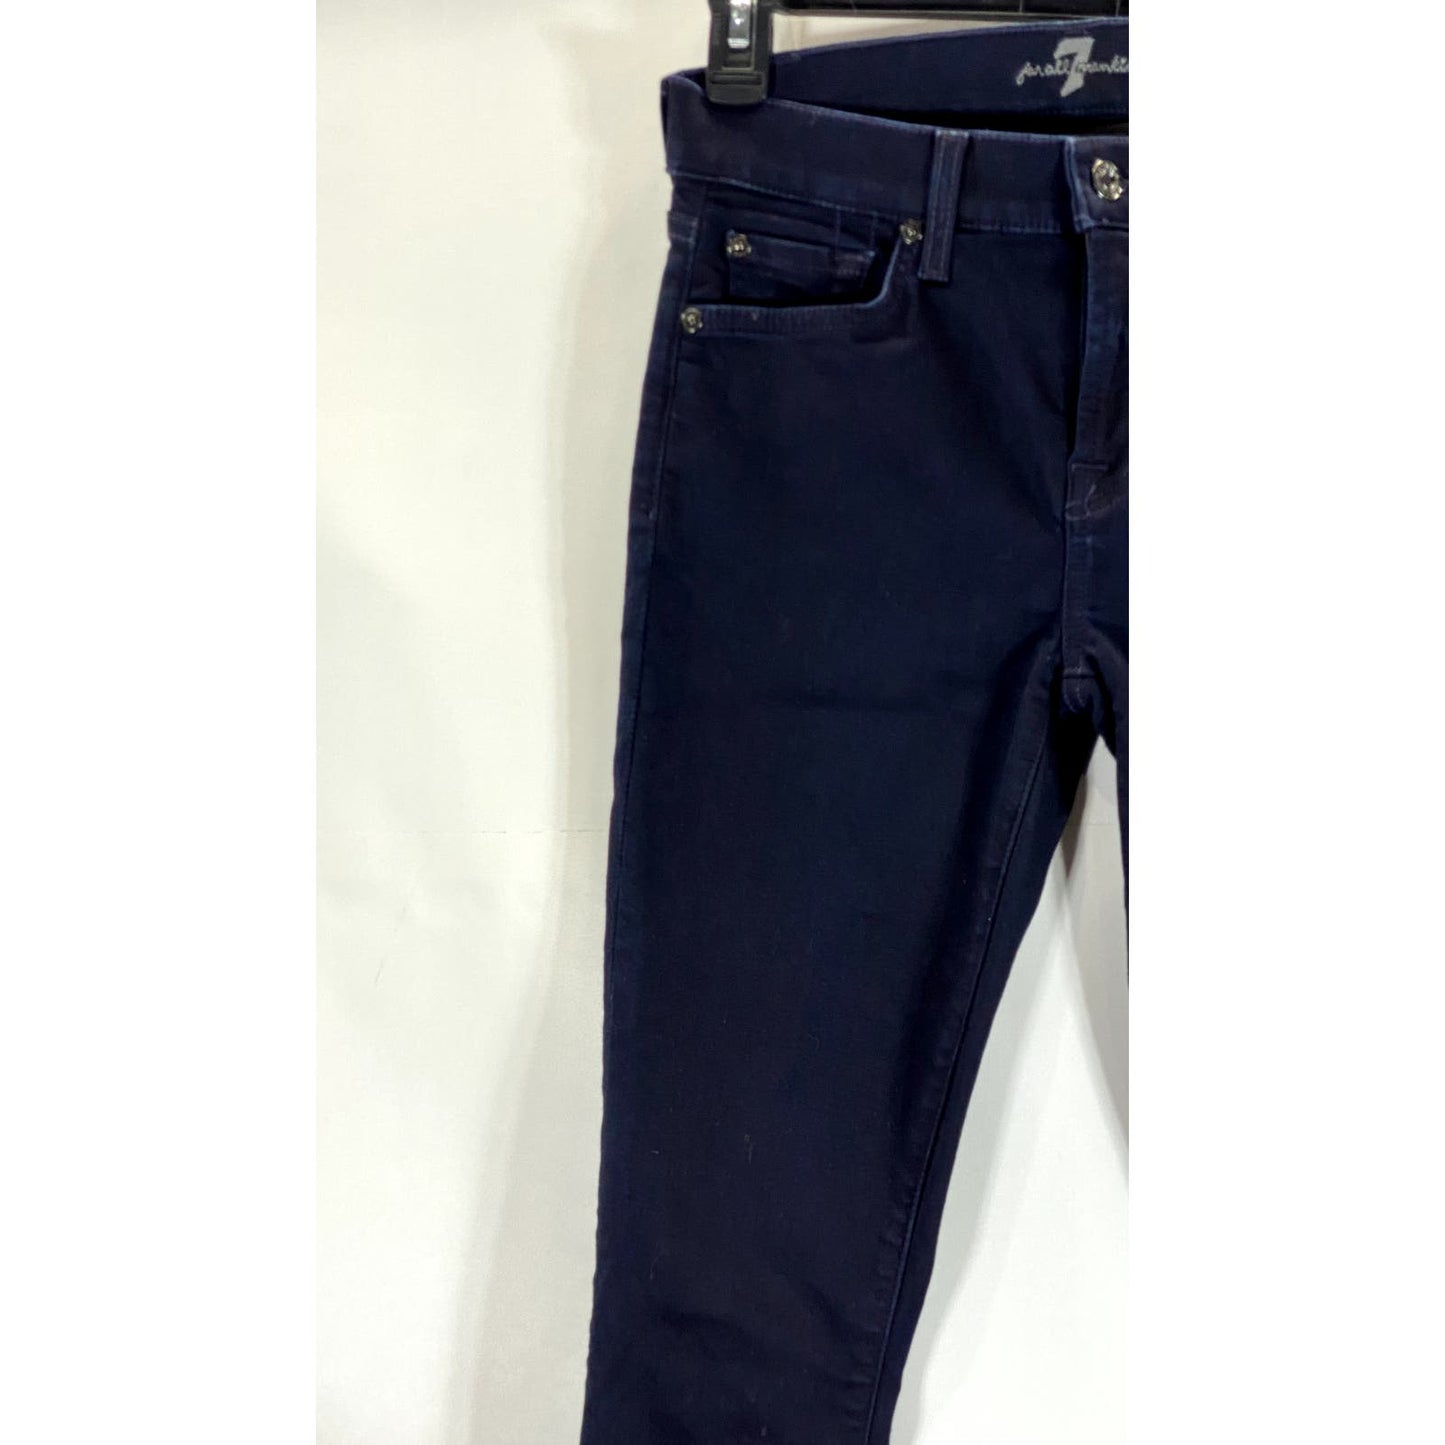 7 FOR ALL MANKIND Women's Dark Navy Skinny Five Pocket Ankle Jeans SZ 25